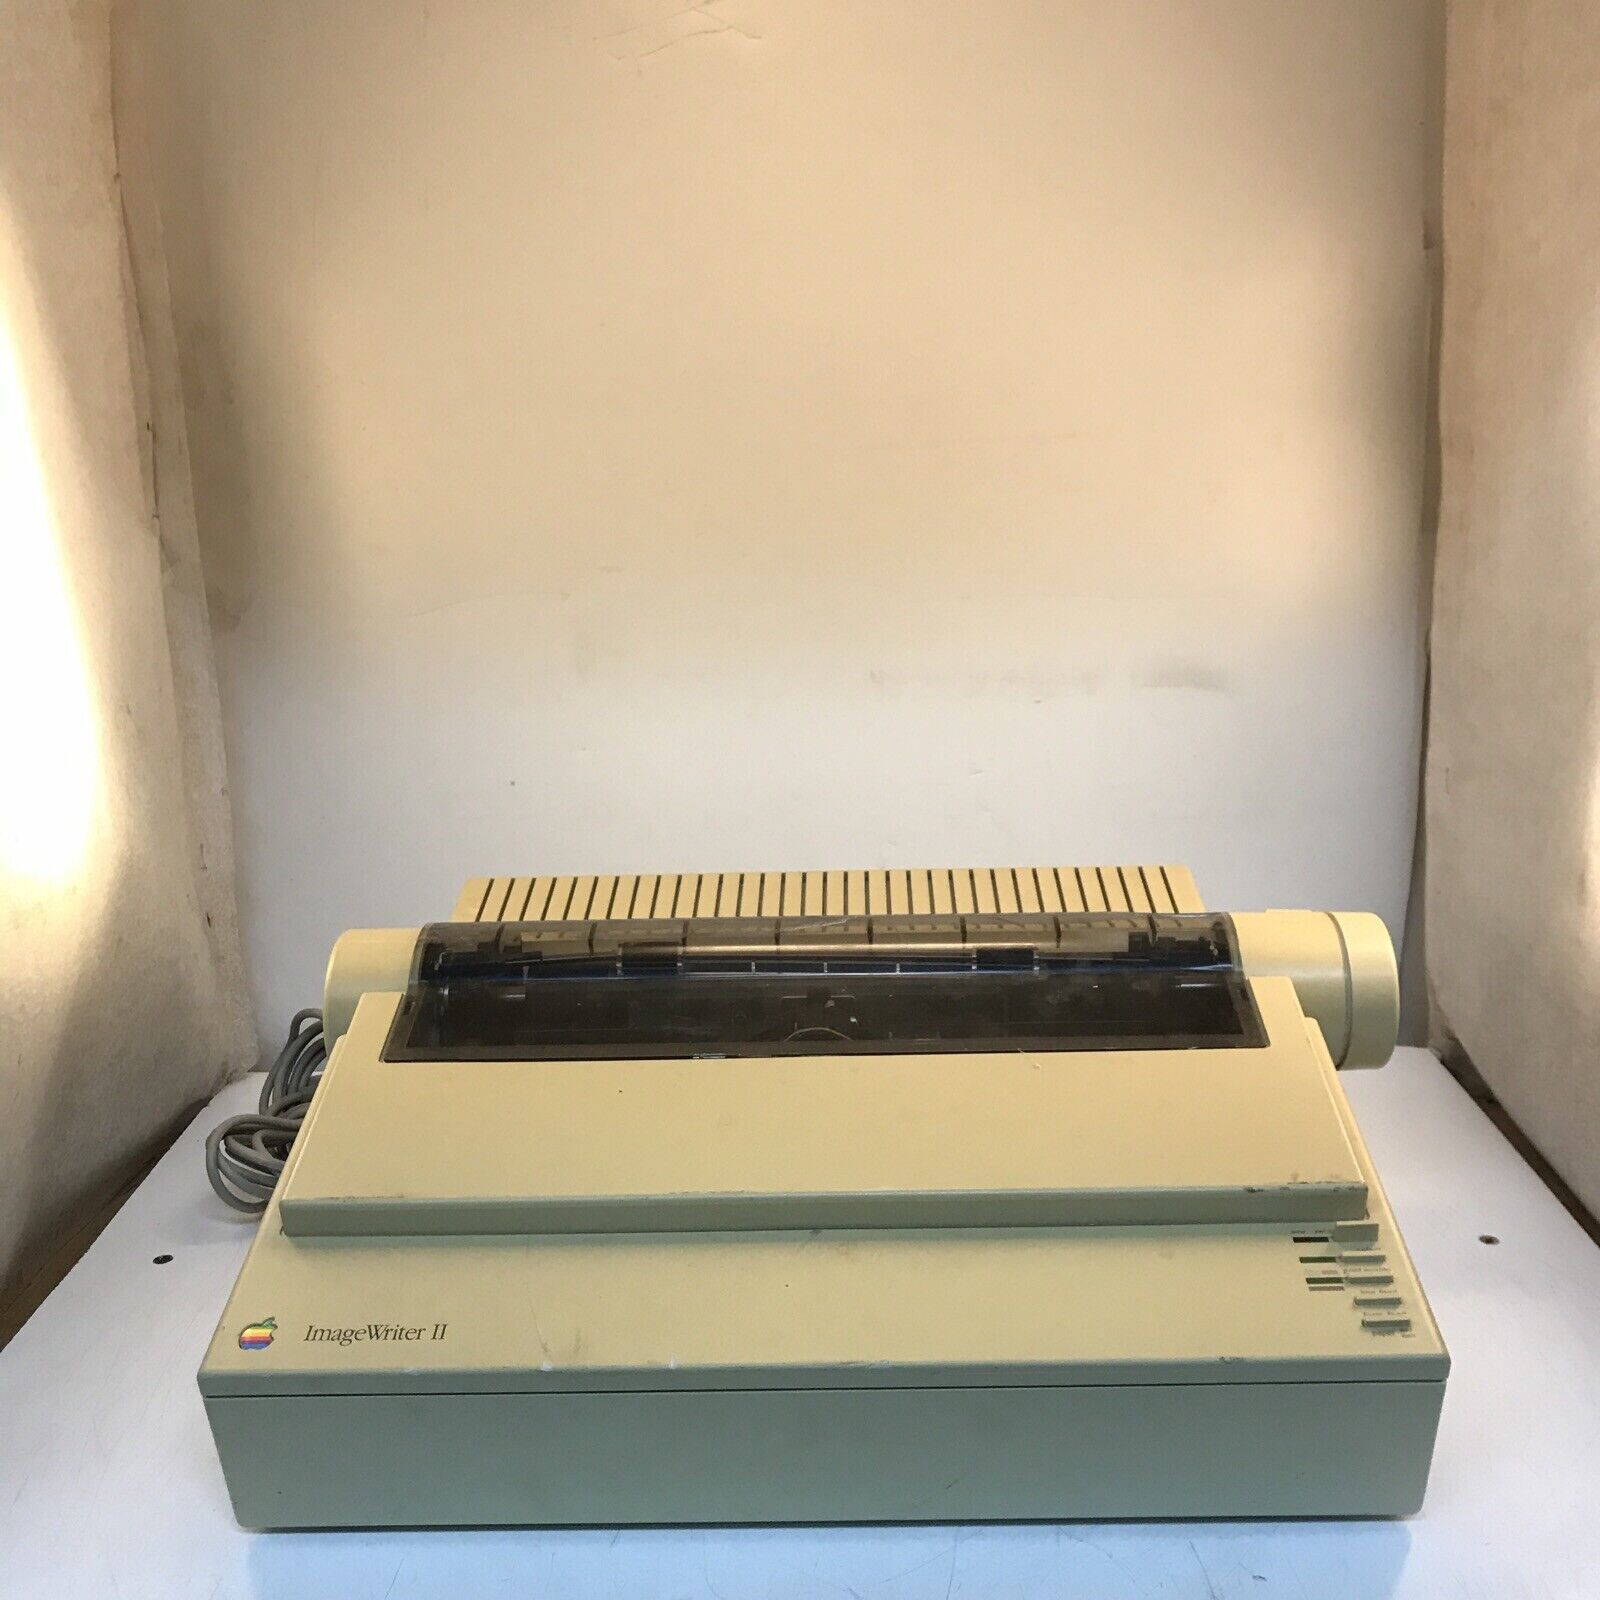 Vintage Apple ImageWriter II Dot Matrix Printer power on untested.